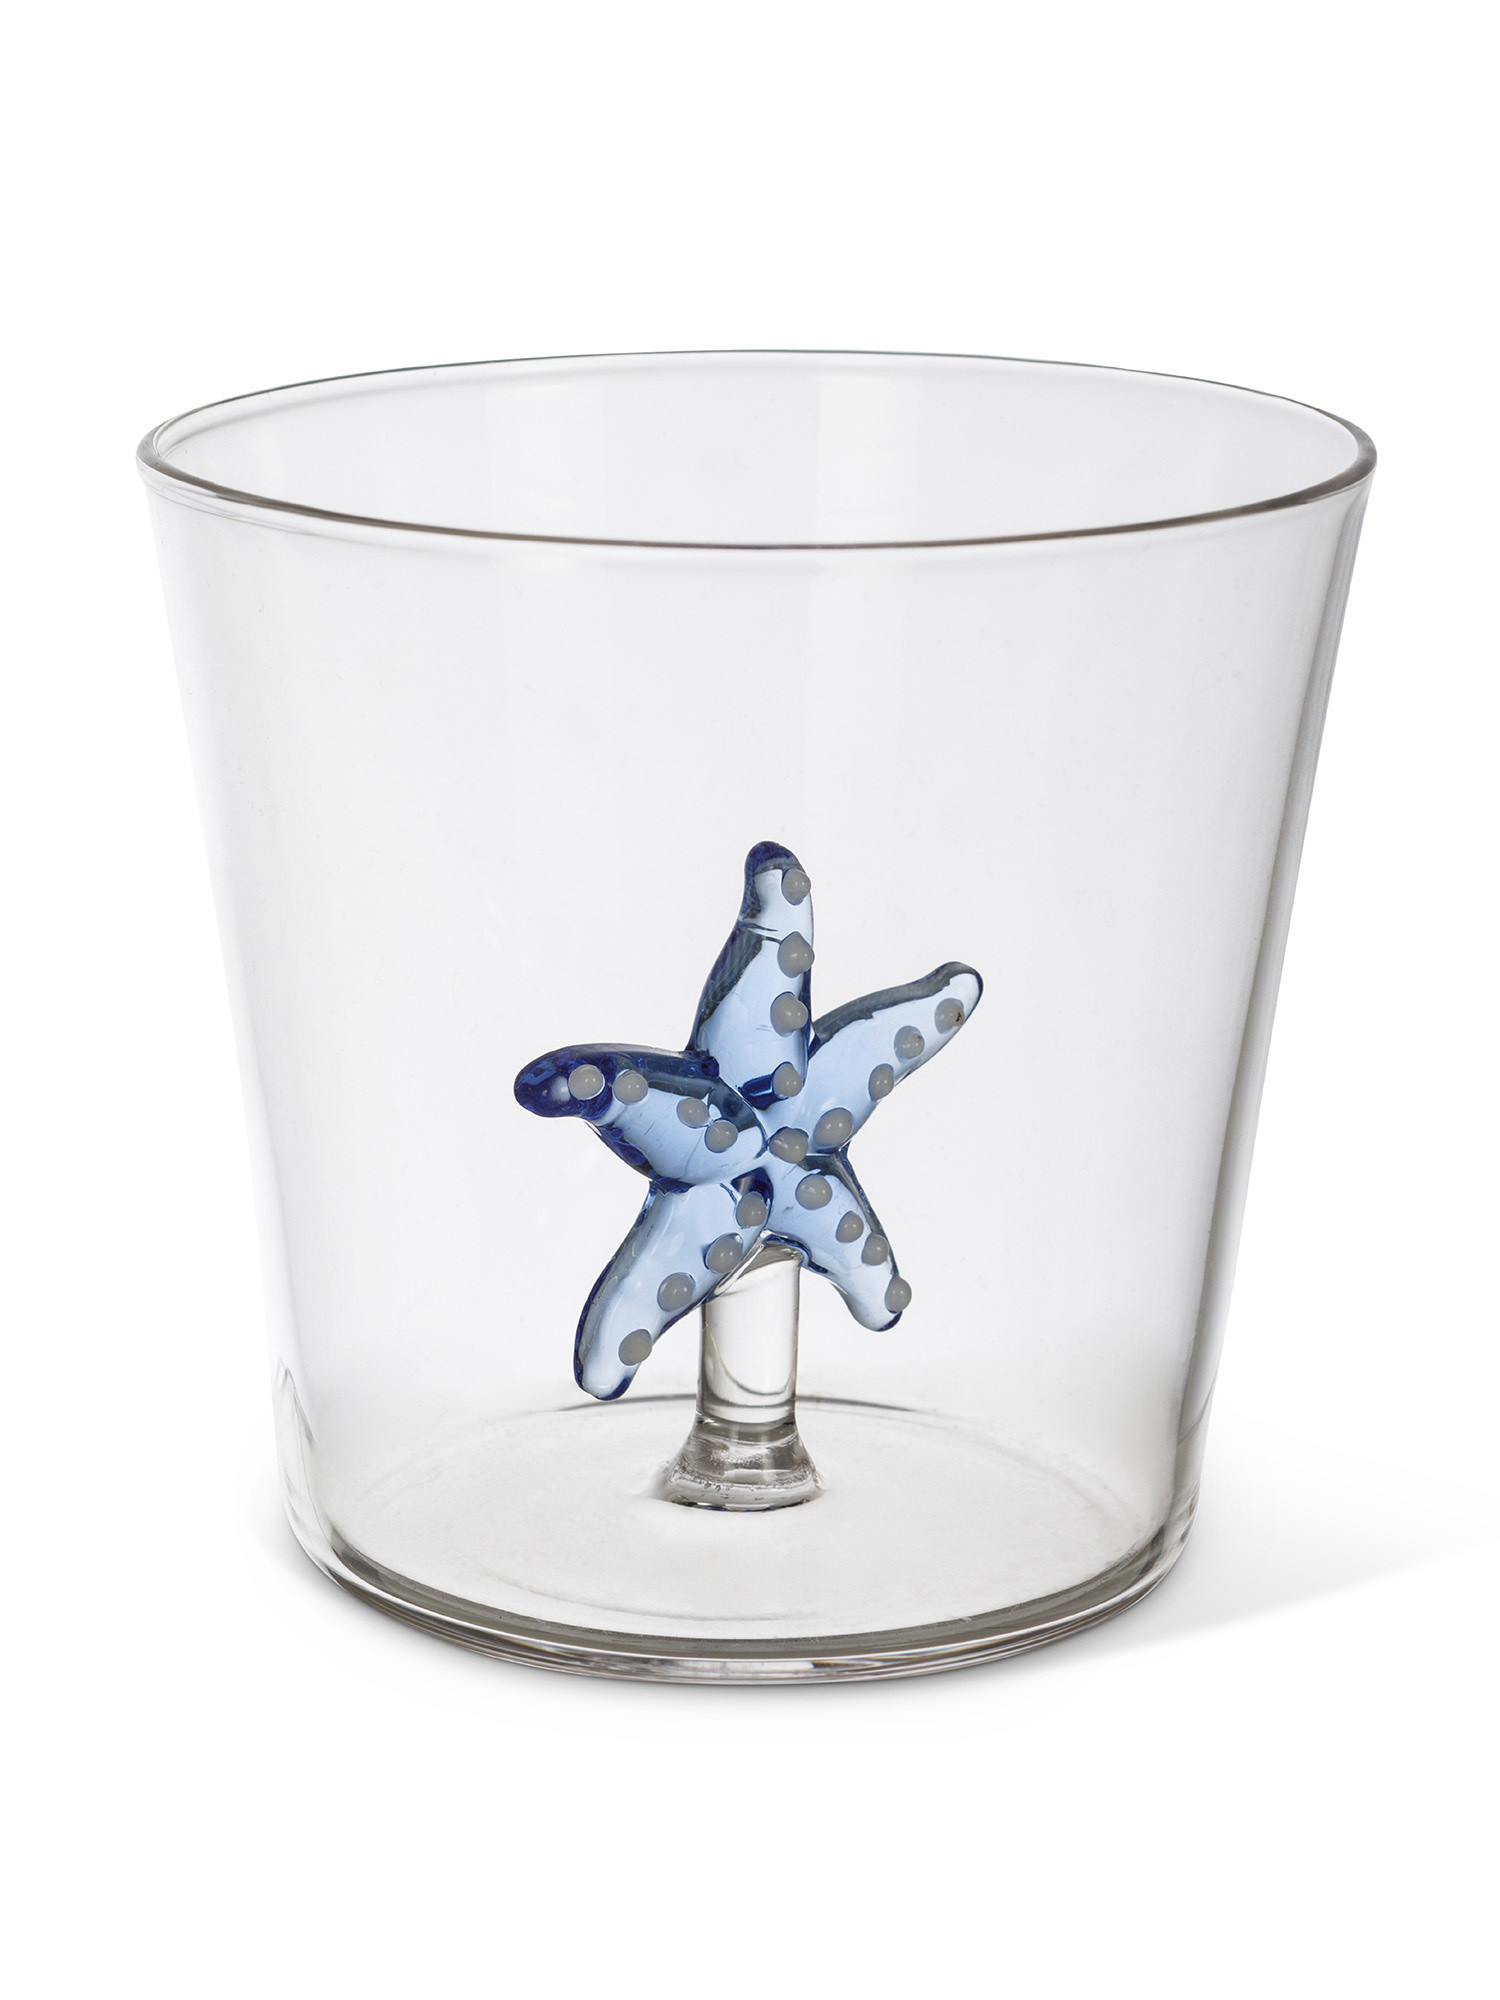 Bicchiere in vetro dettaglio stella marina, Trasparente, large image number 1